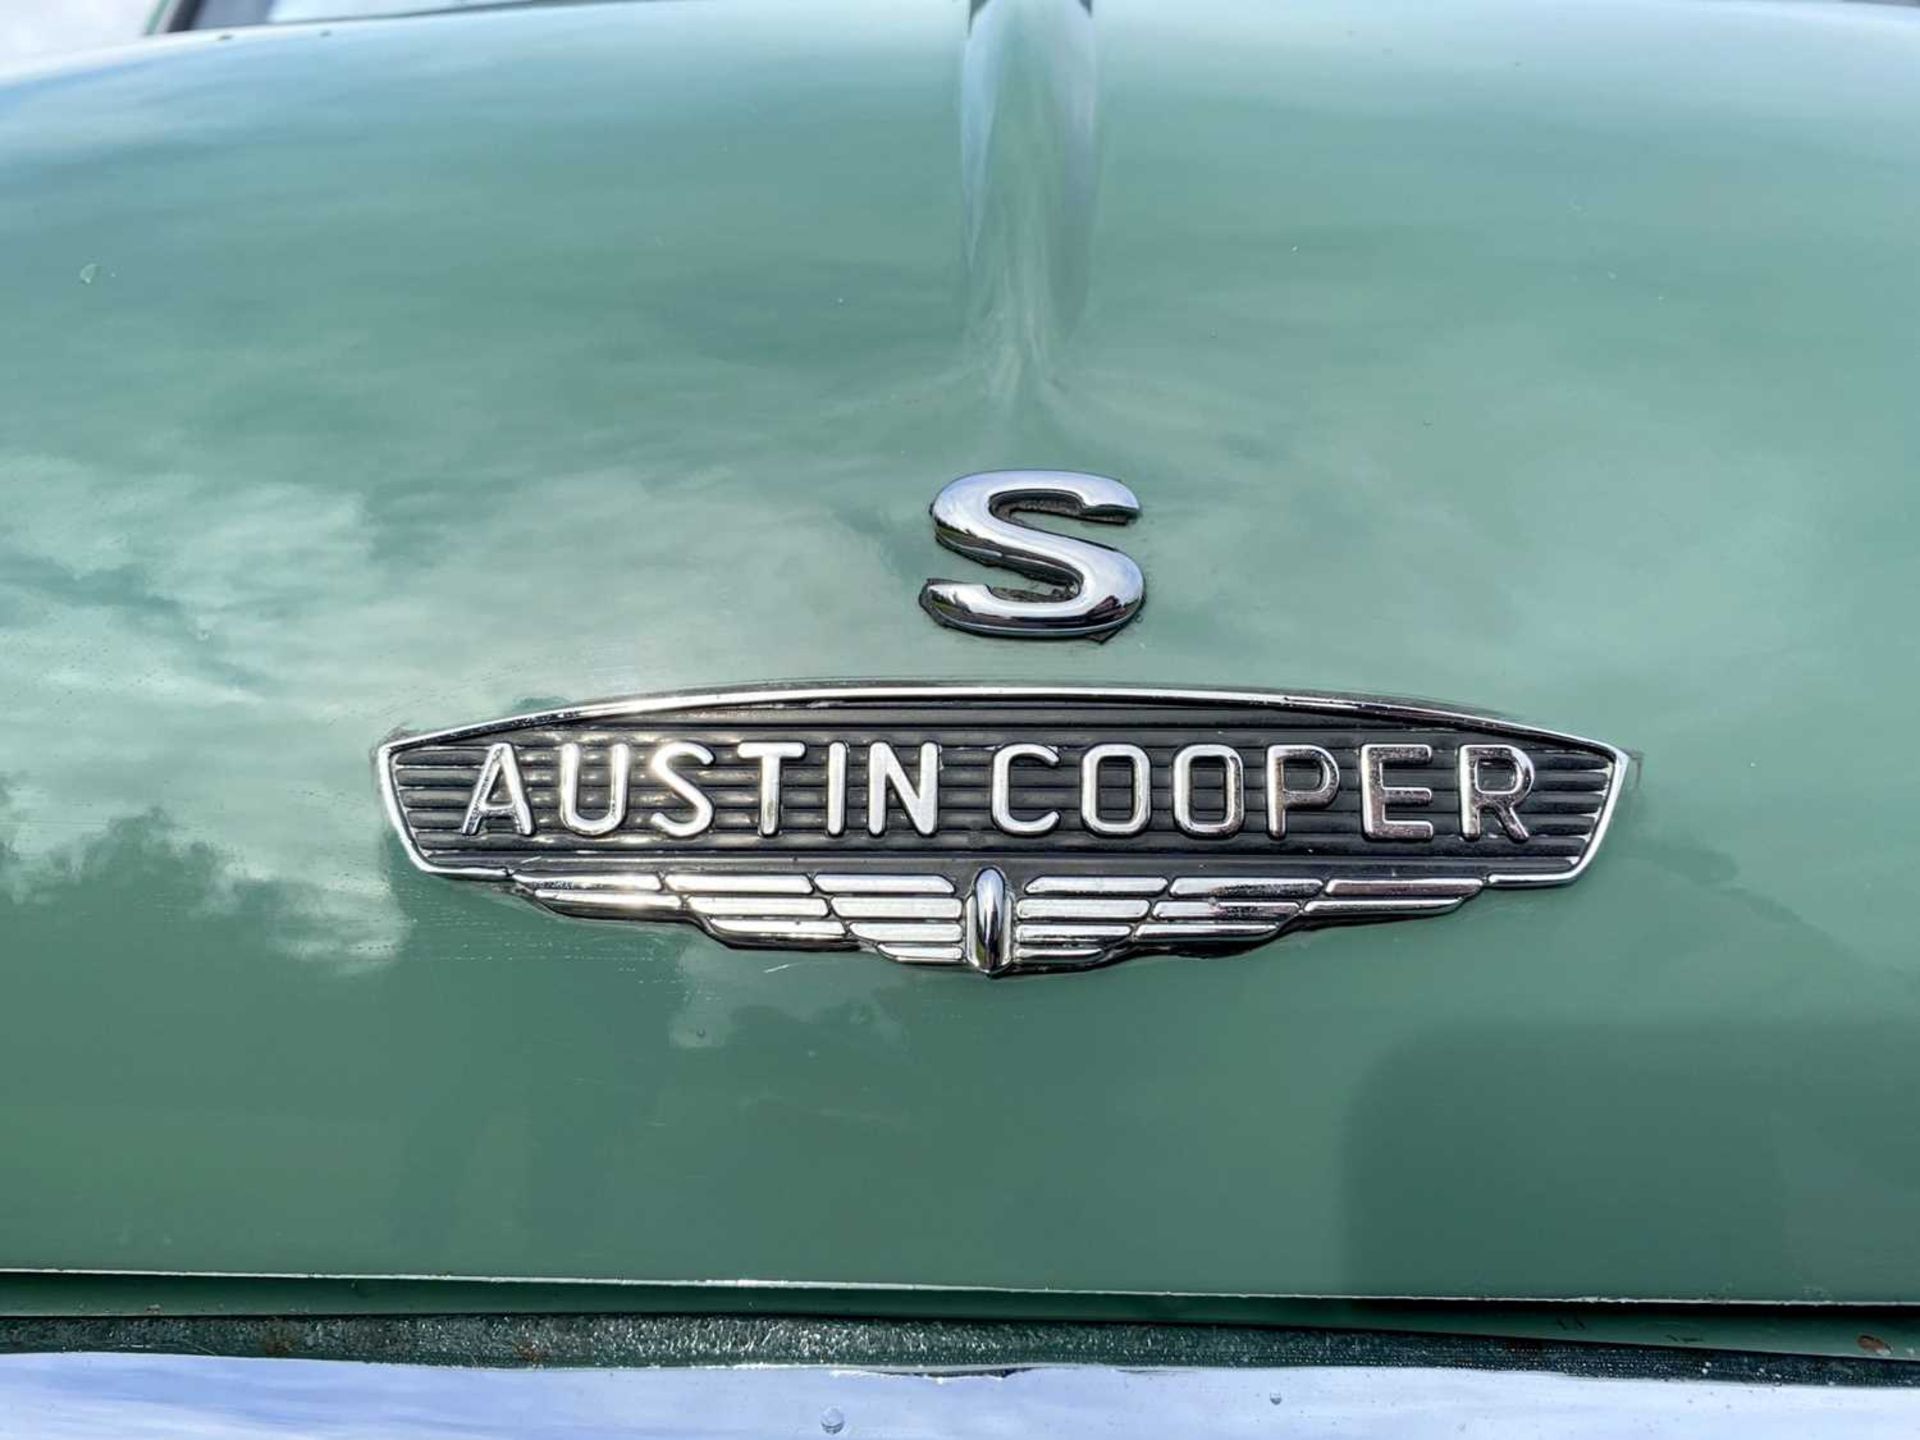 1967 Austin Mini-Cooper S Tribute - Image 69 of 75